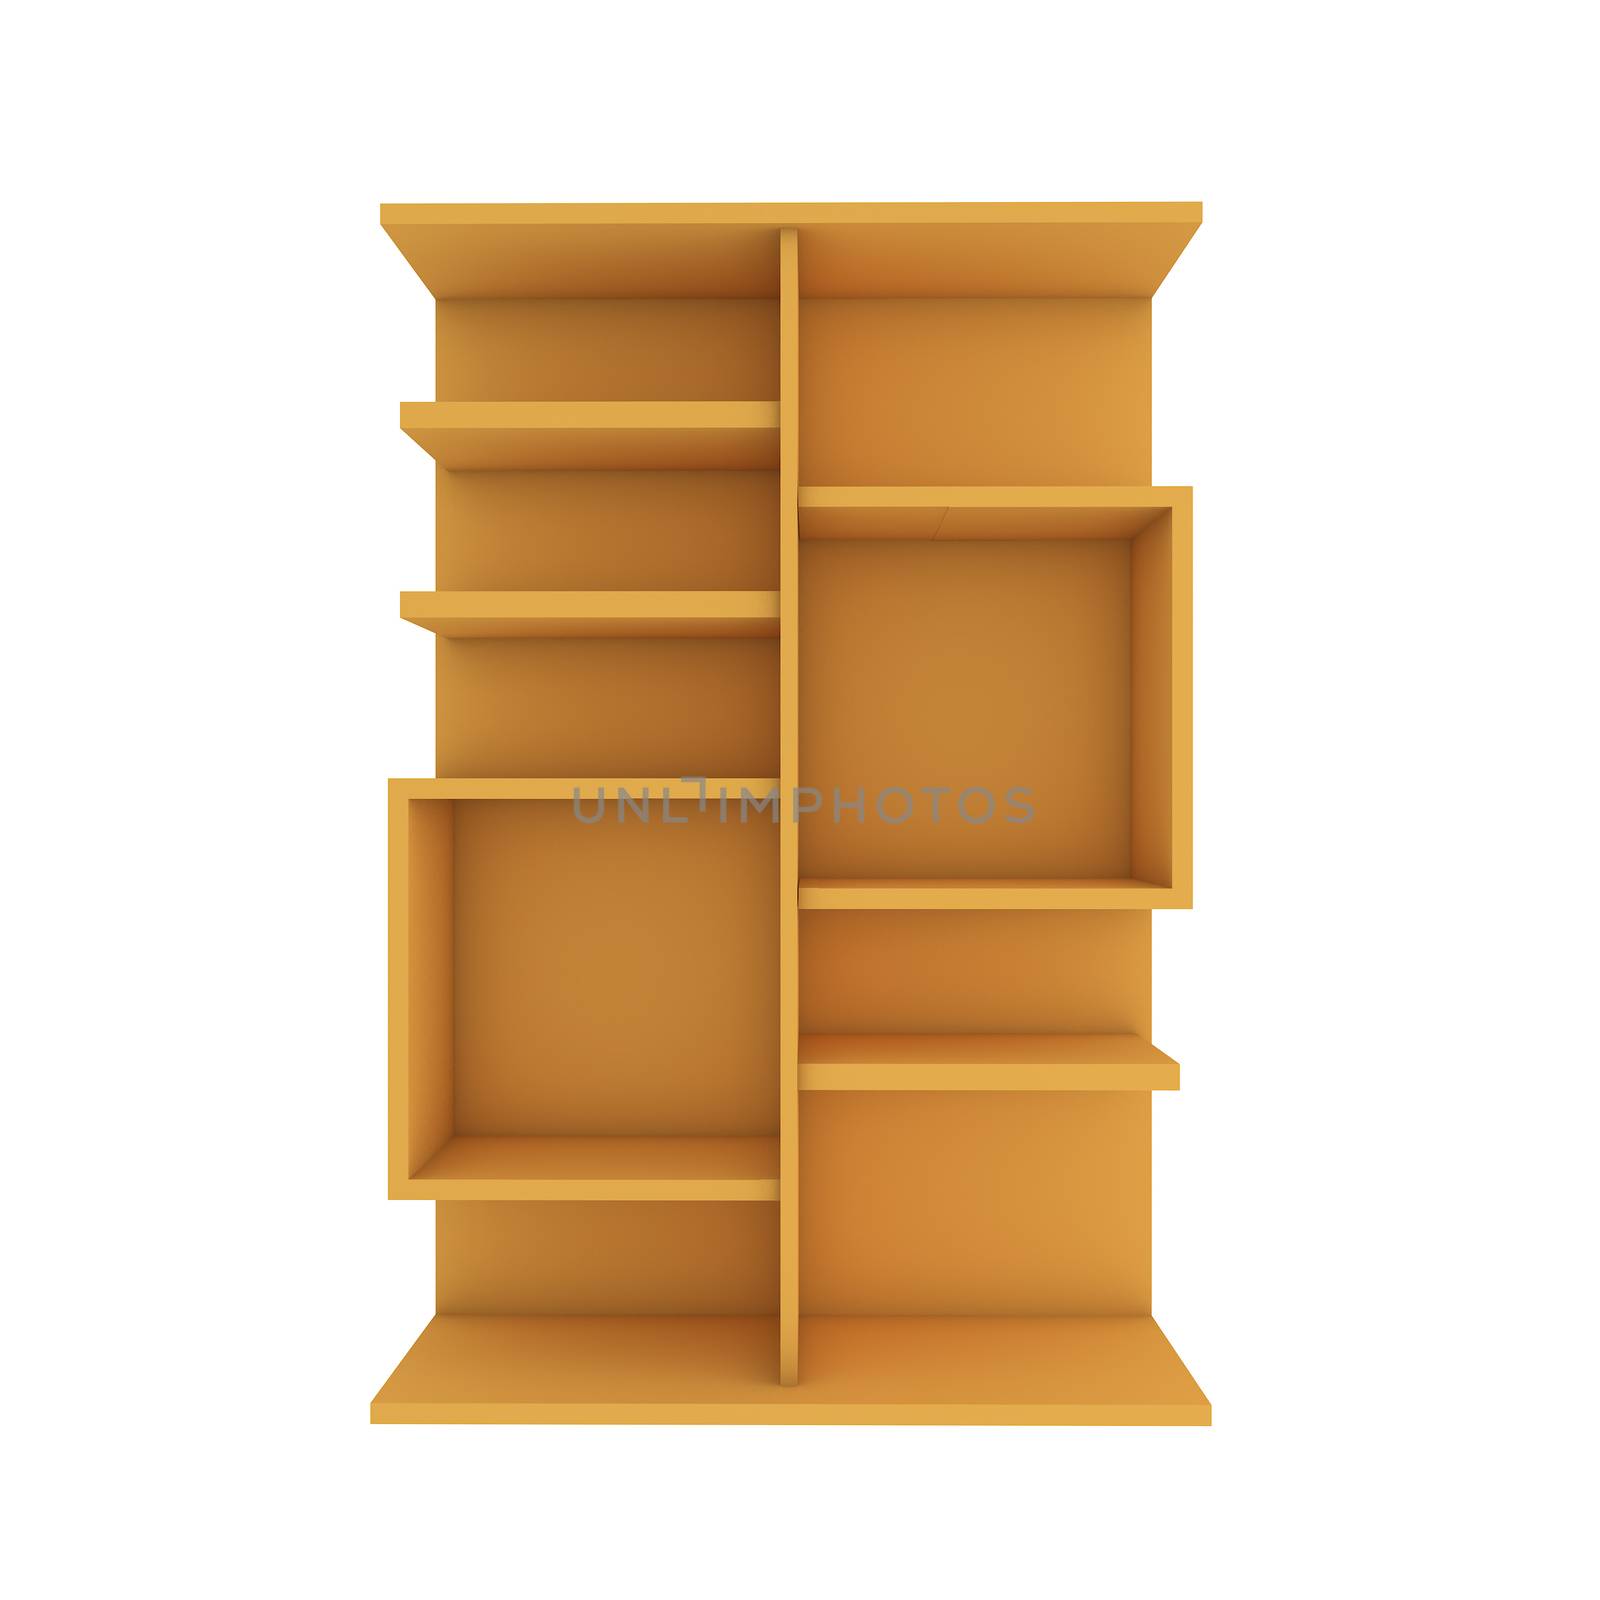 Color orange shelf design with white background